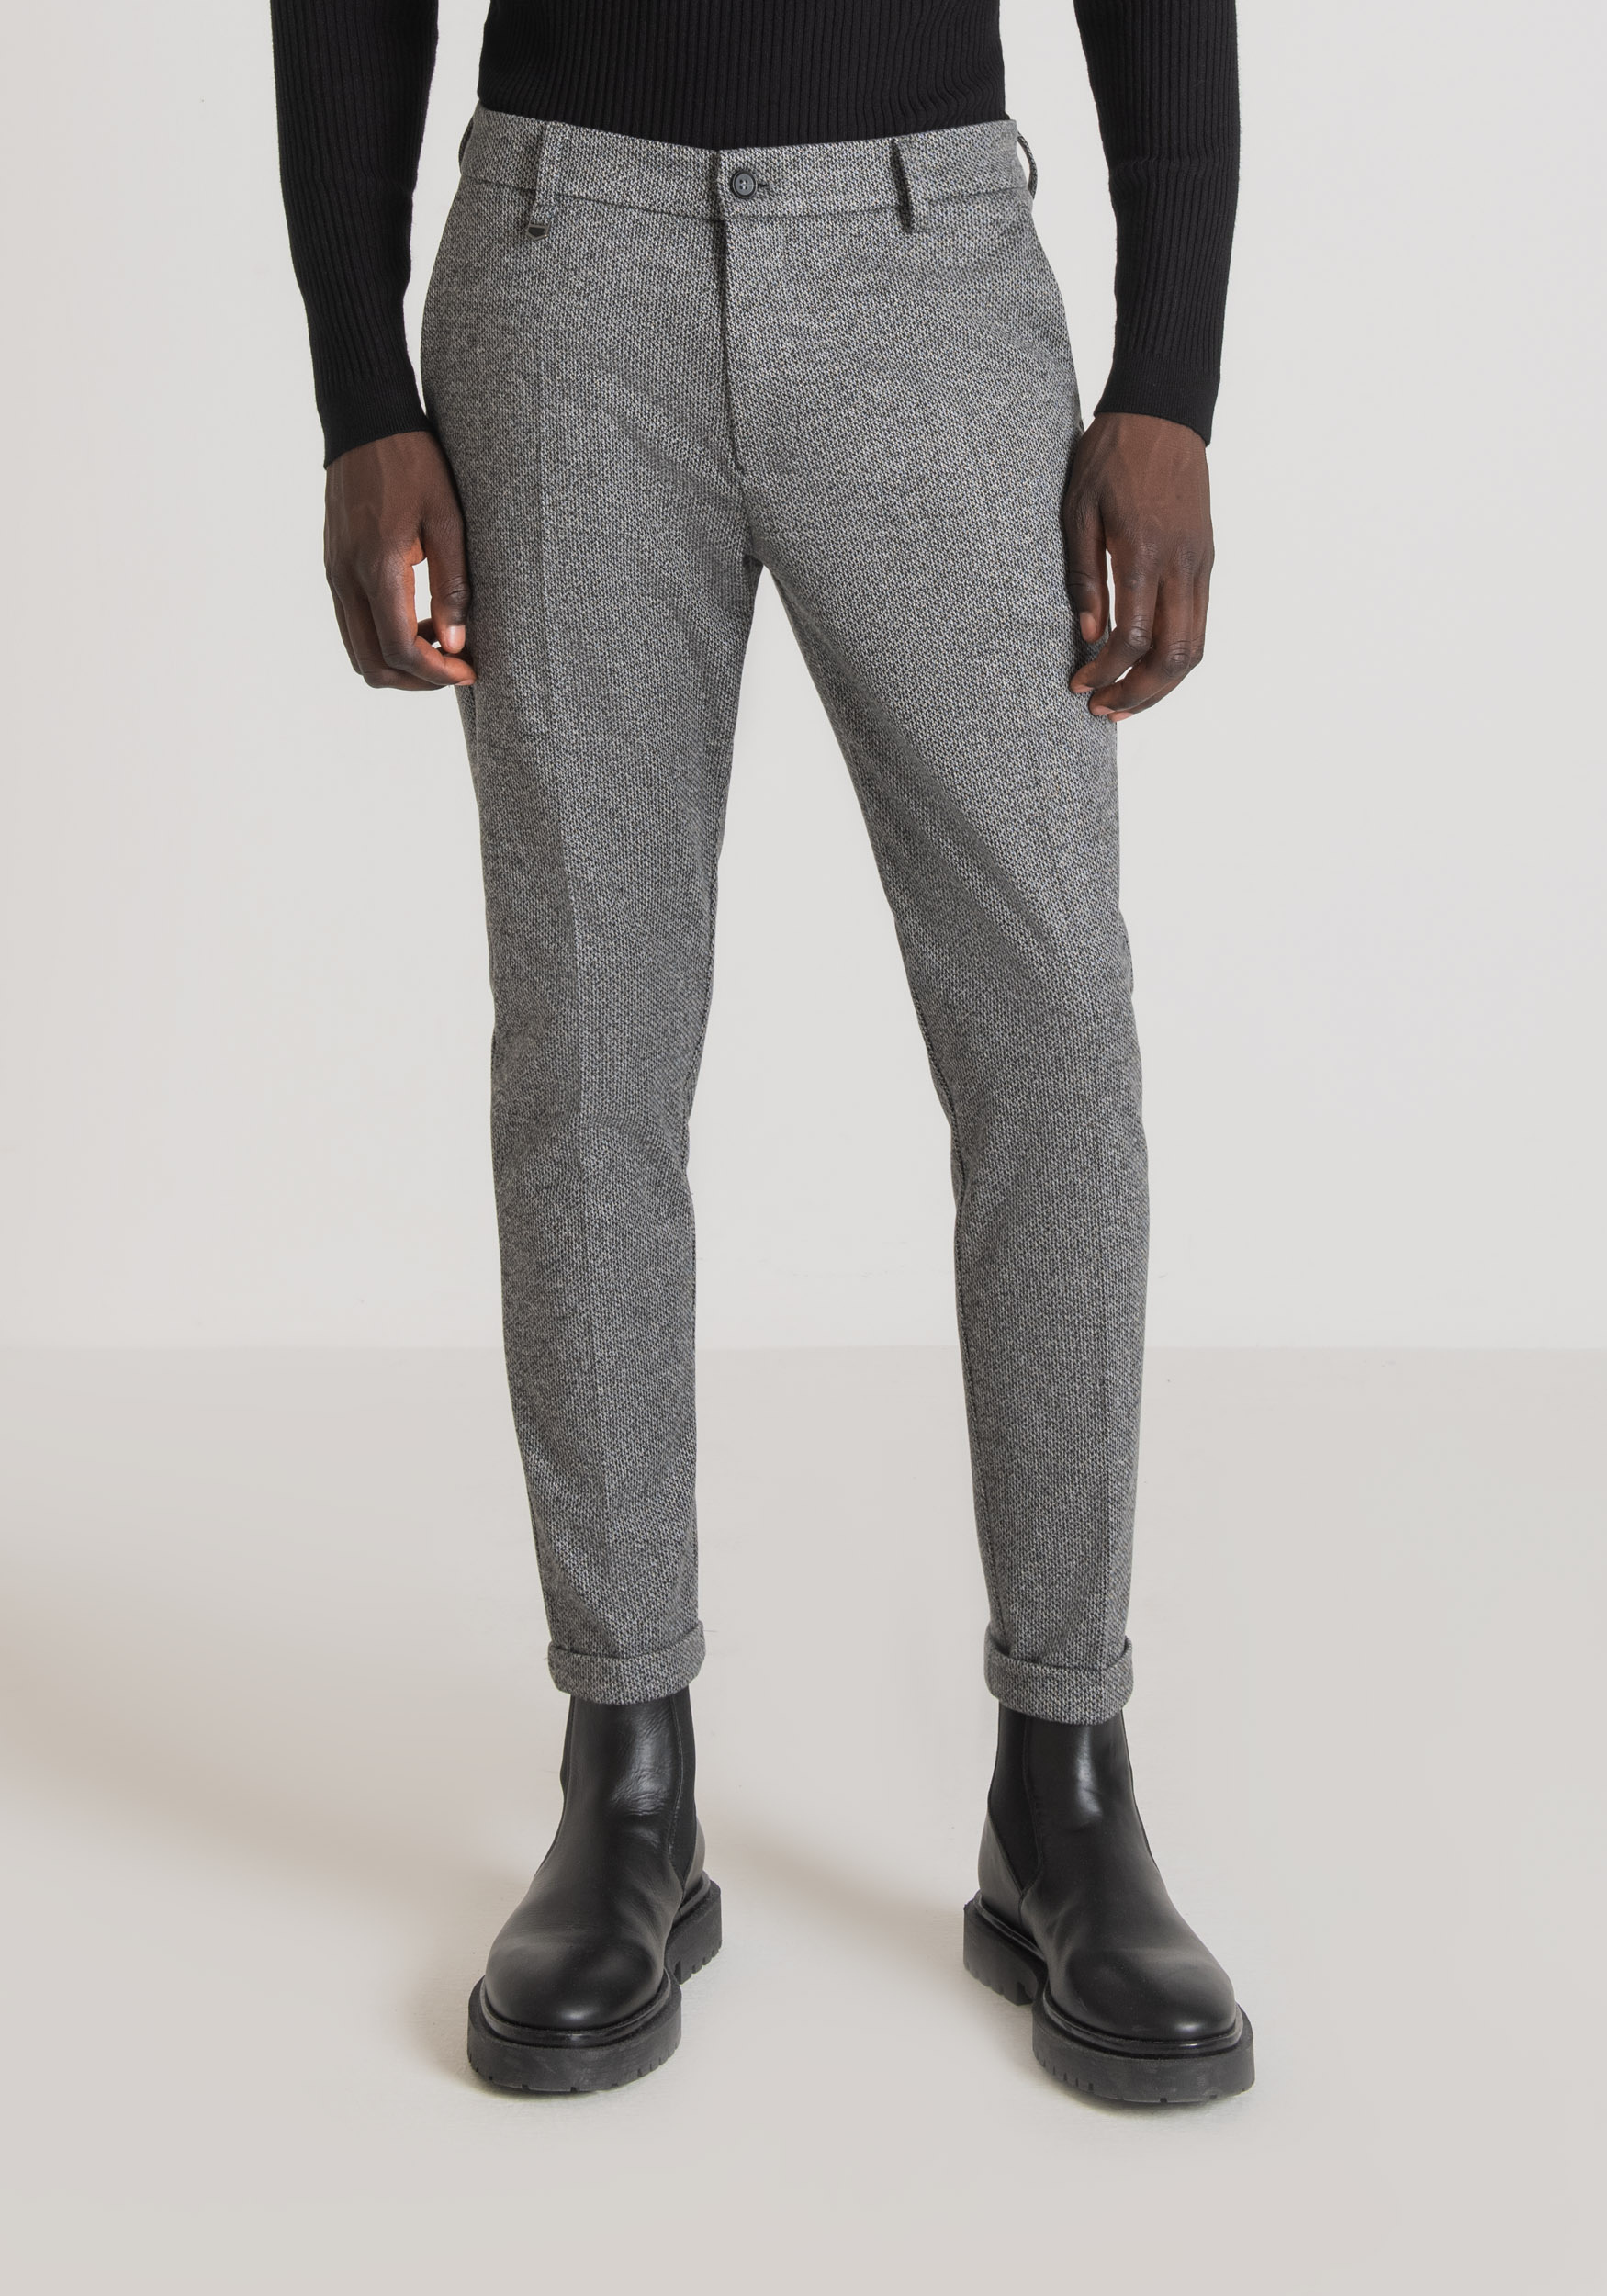 Antony Morato Pantalon Super Skinny Fit Ashe En Tissu De Viscose Melangee Elastique Chine Gris Moyen | Homme Pantalons